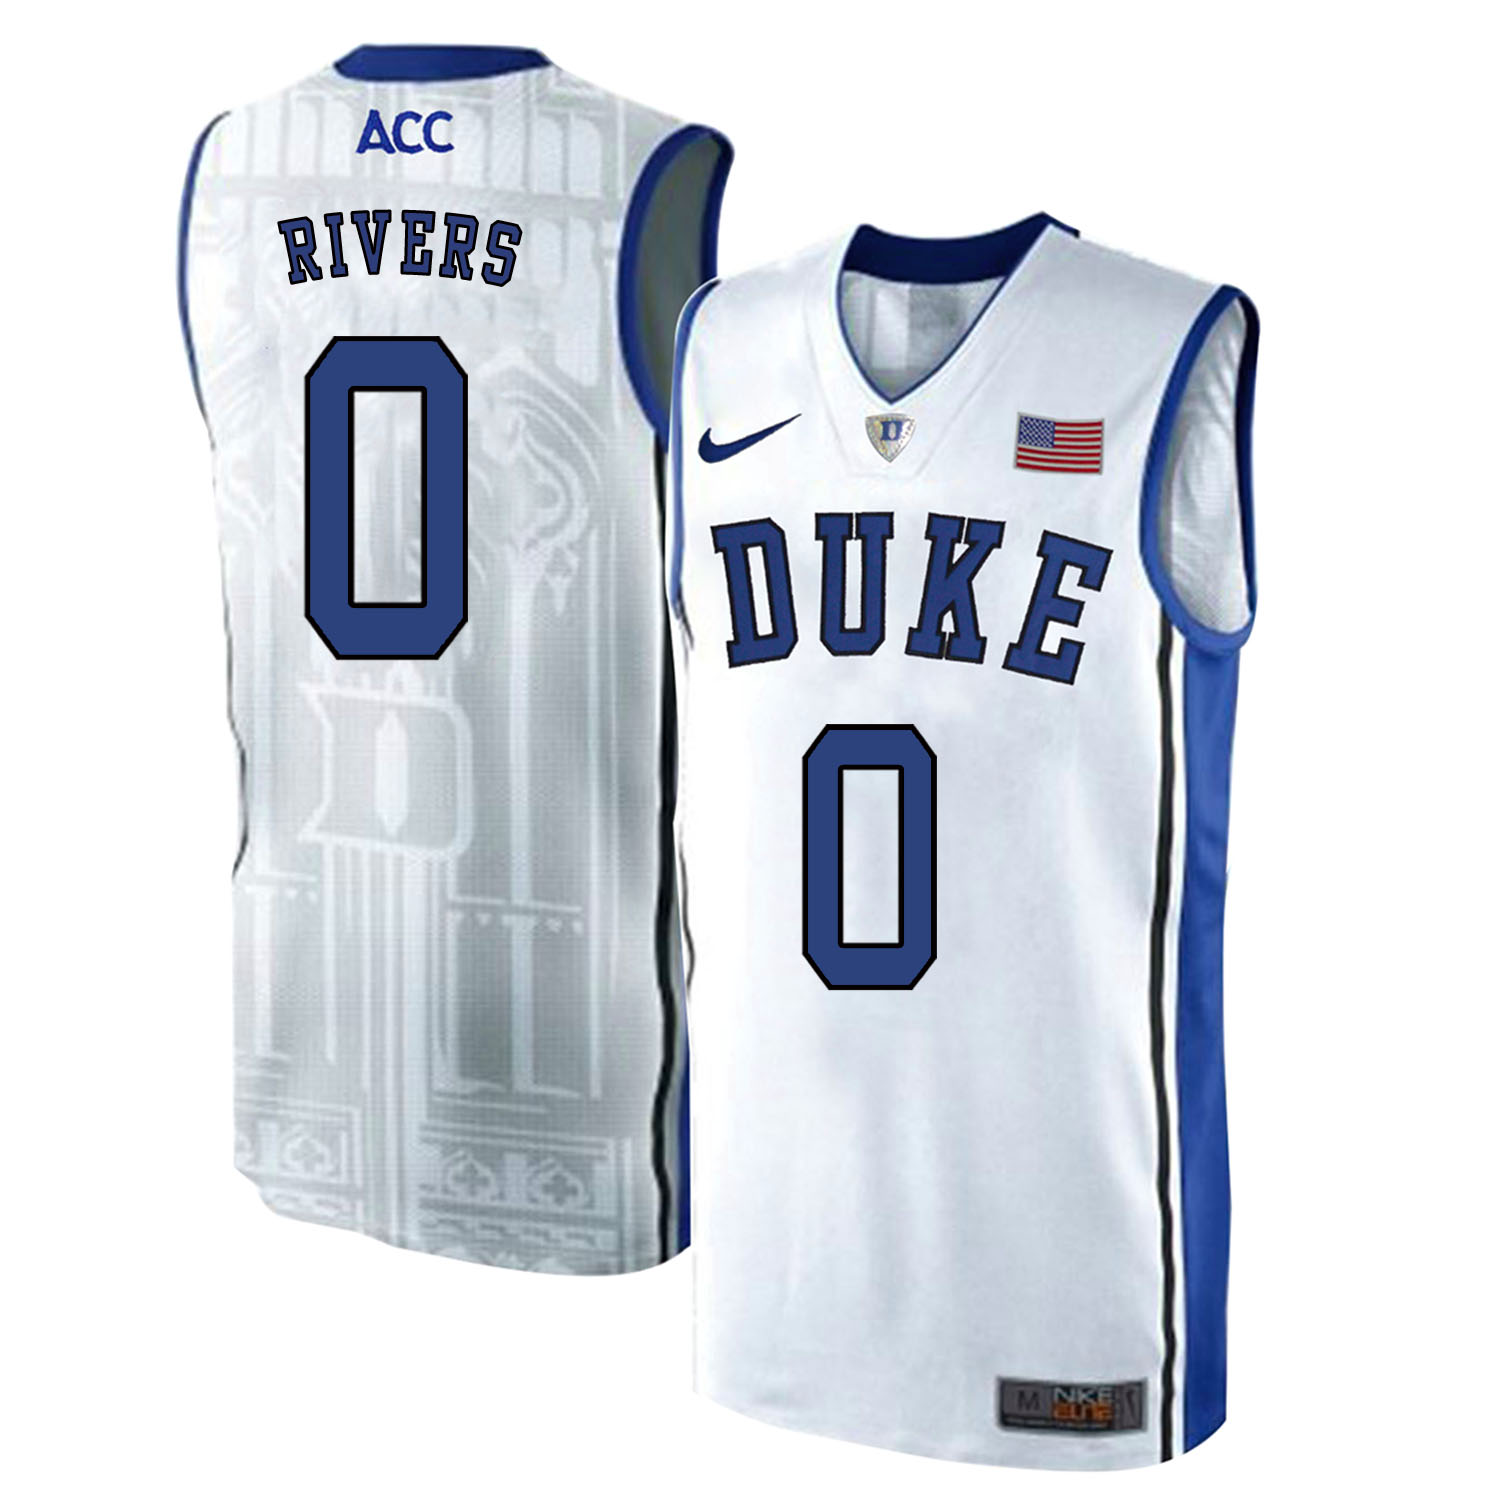 Duke Blue Devils 0 Austin Rivers White Elite Nike College Basketball Jersey